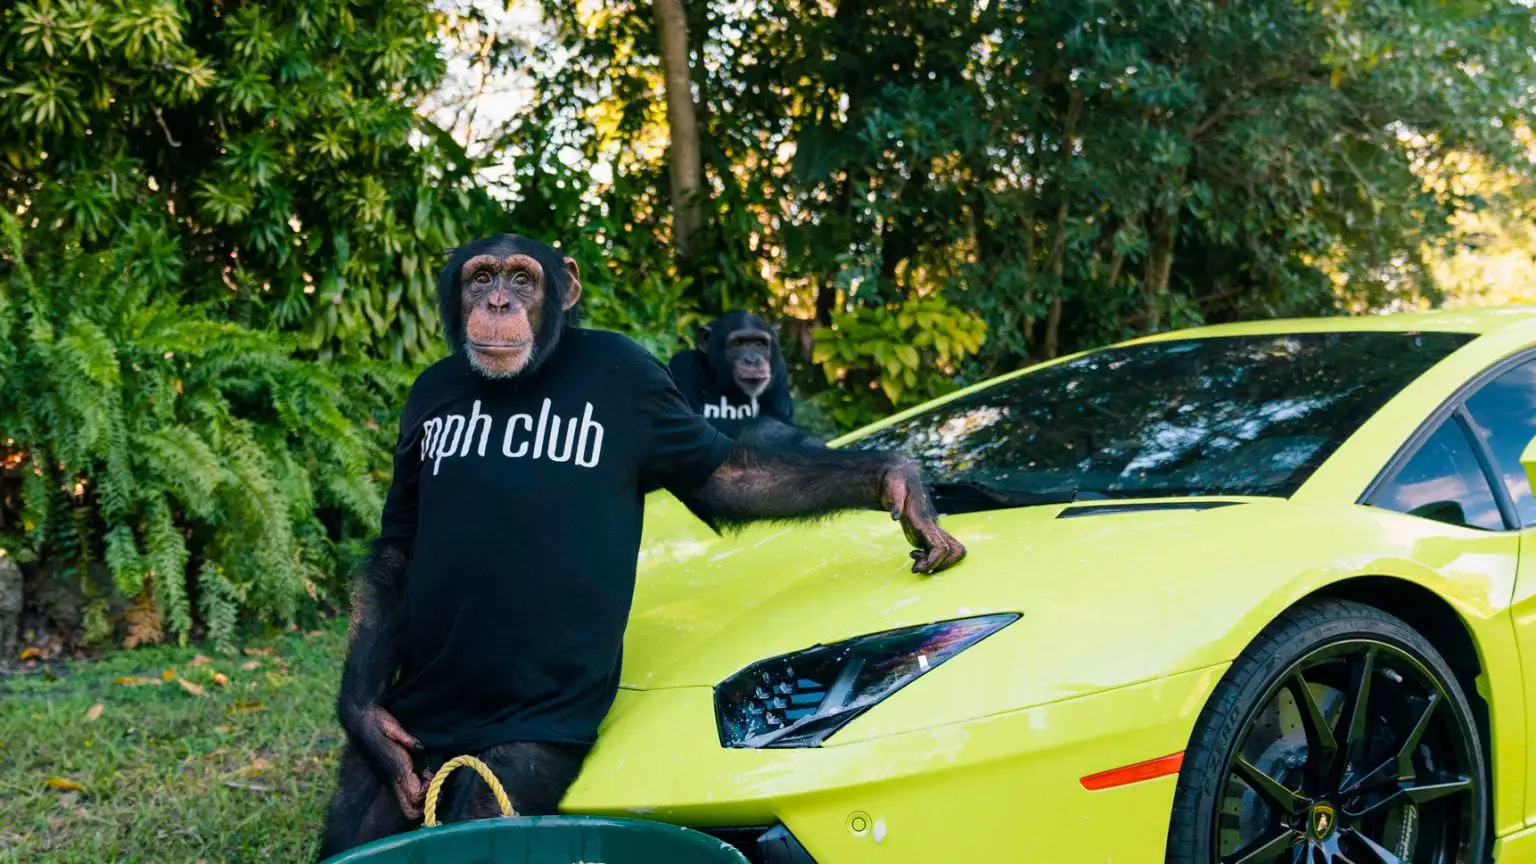 myrtle beach safari chimpanzees and green lamborghini aventador rental mph club